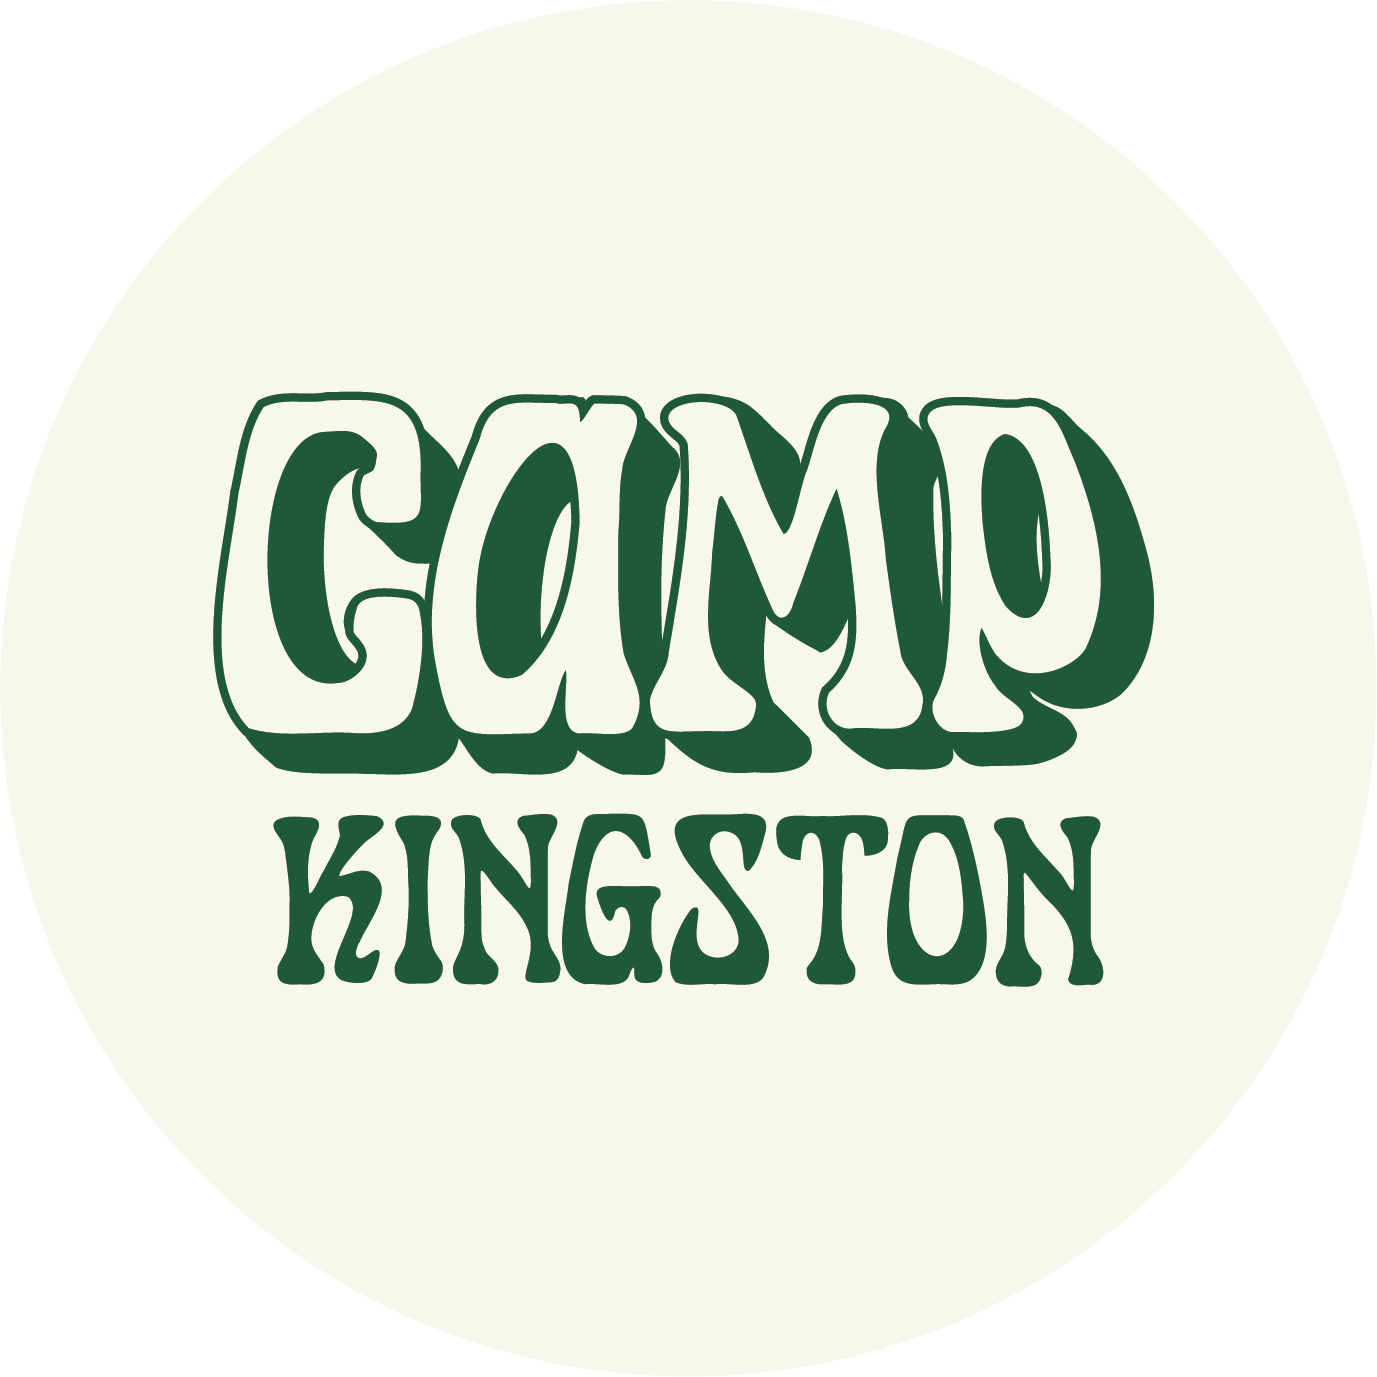 Camp Kingston